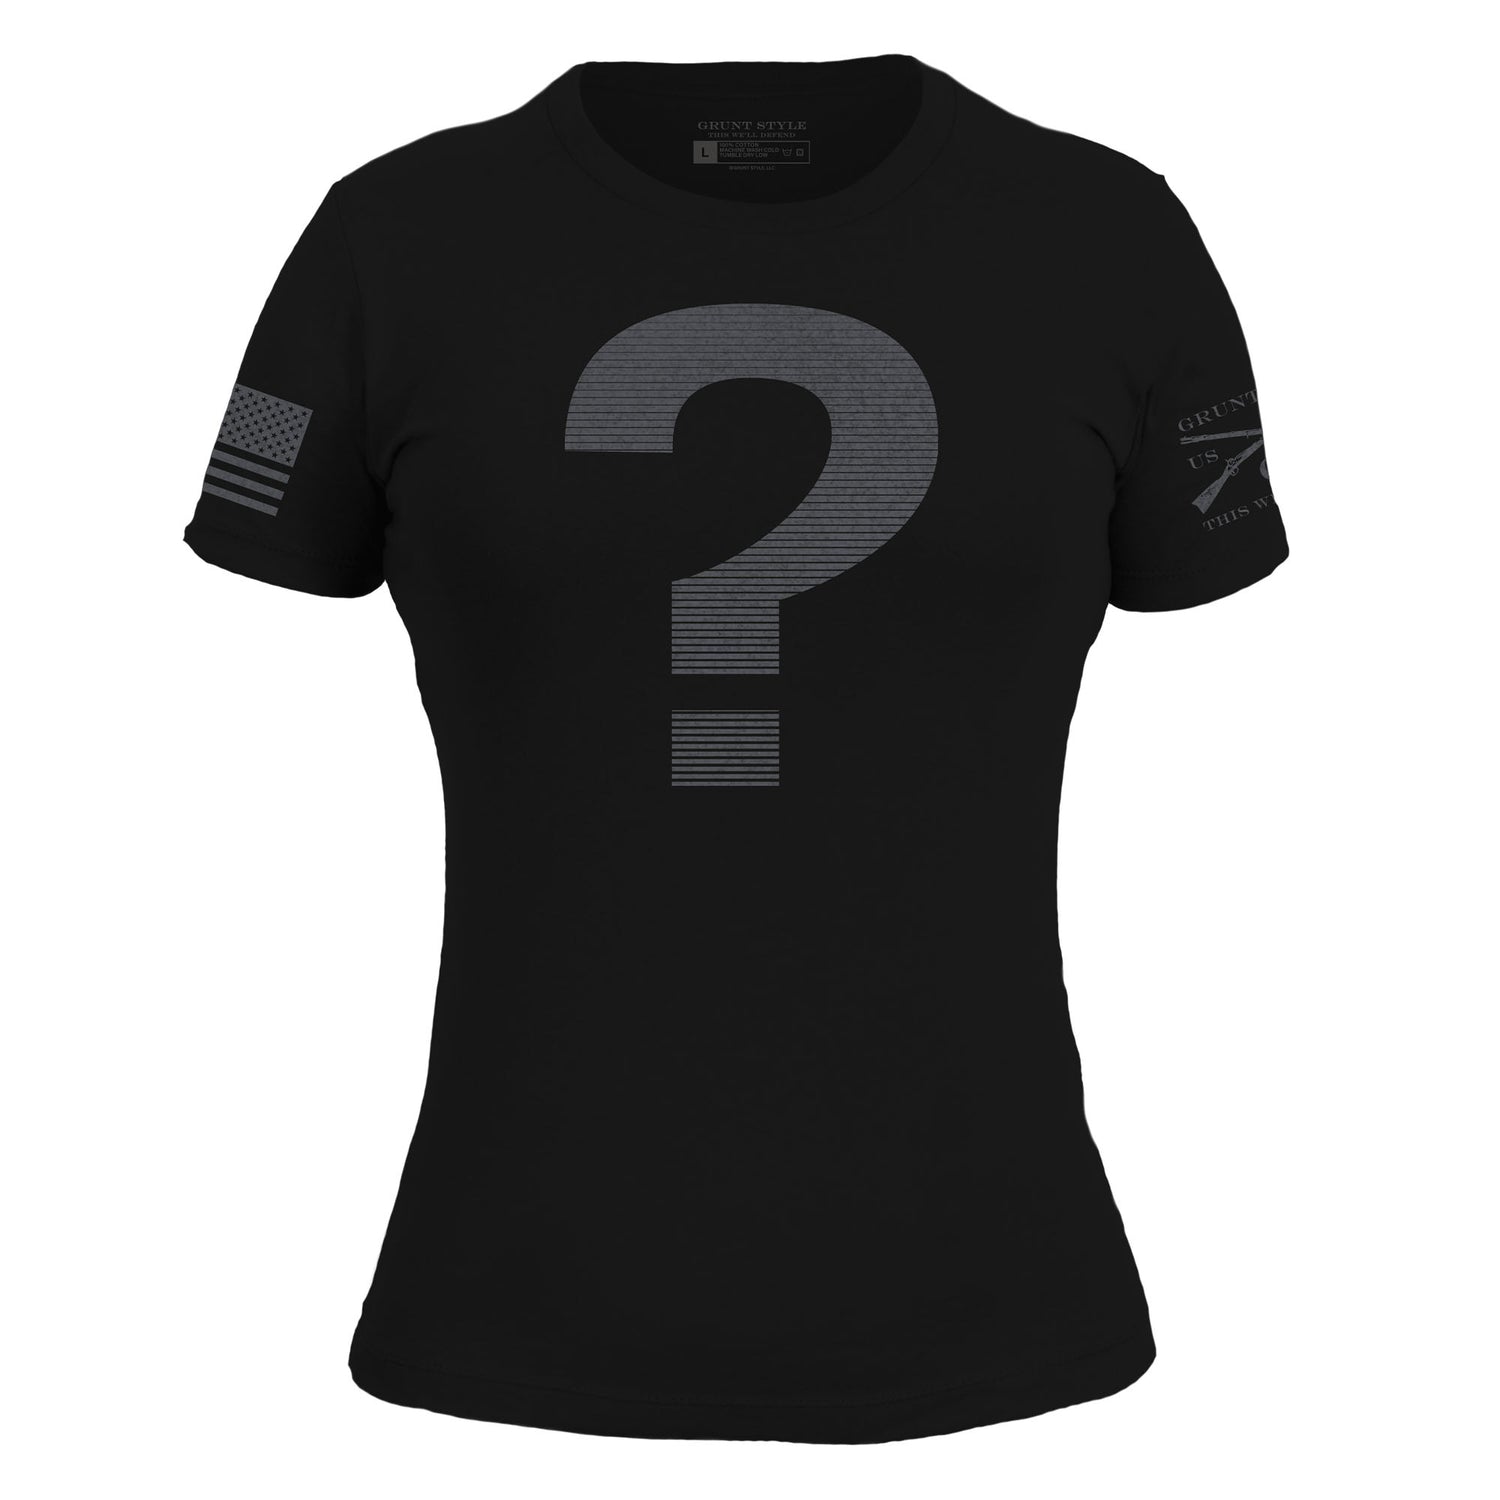 Women's Mystery Shirt | Patriotic Clothing